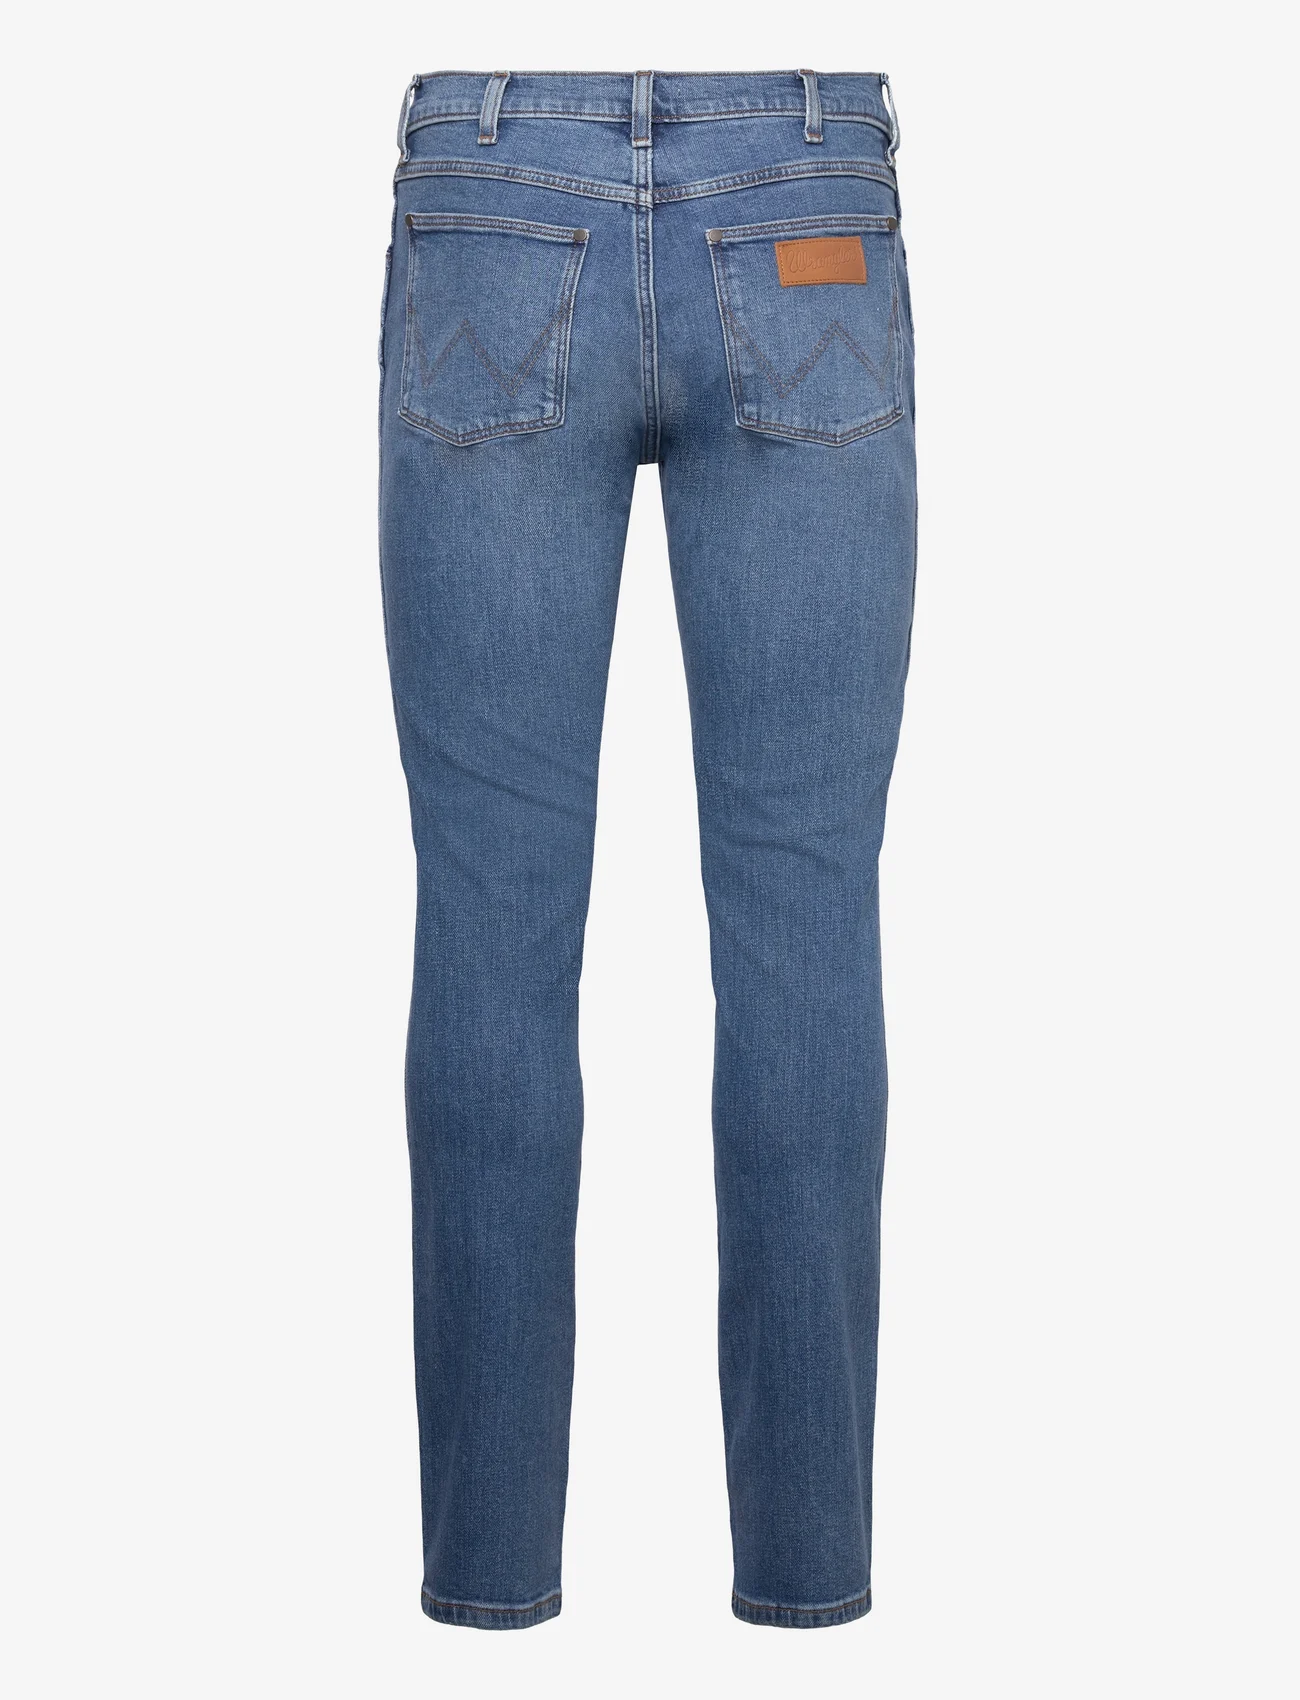 Wrangler - LARSTON - slim fit jeans - new favorite - 1